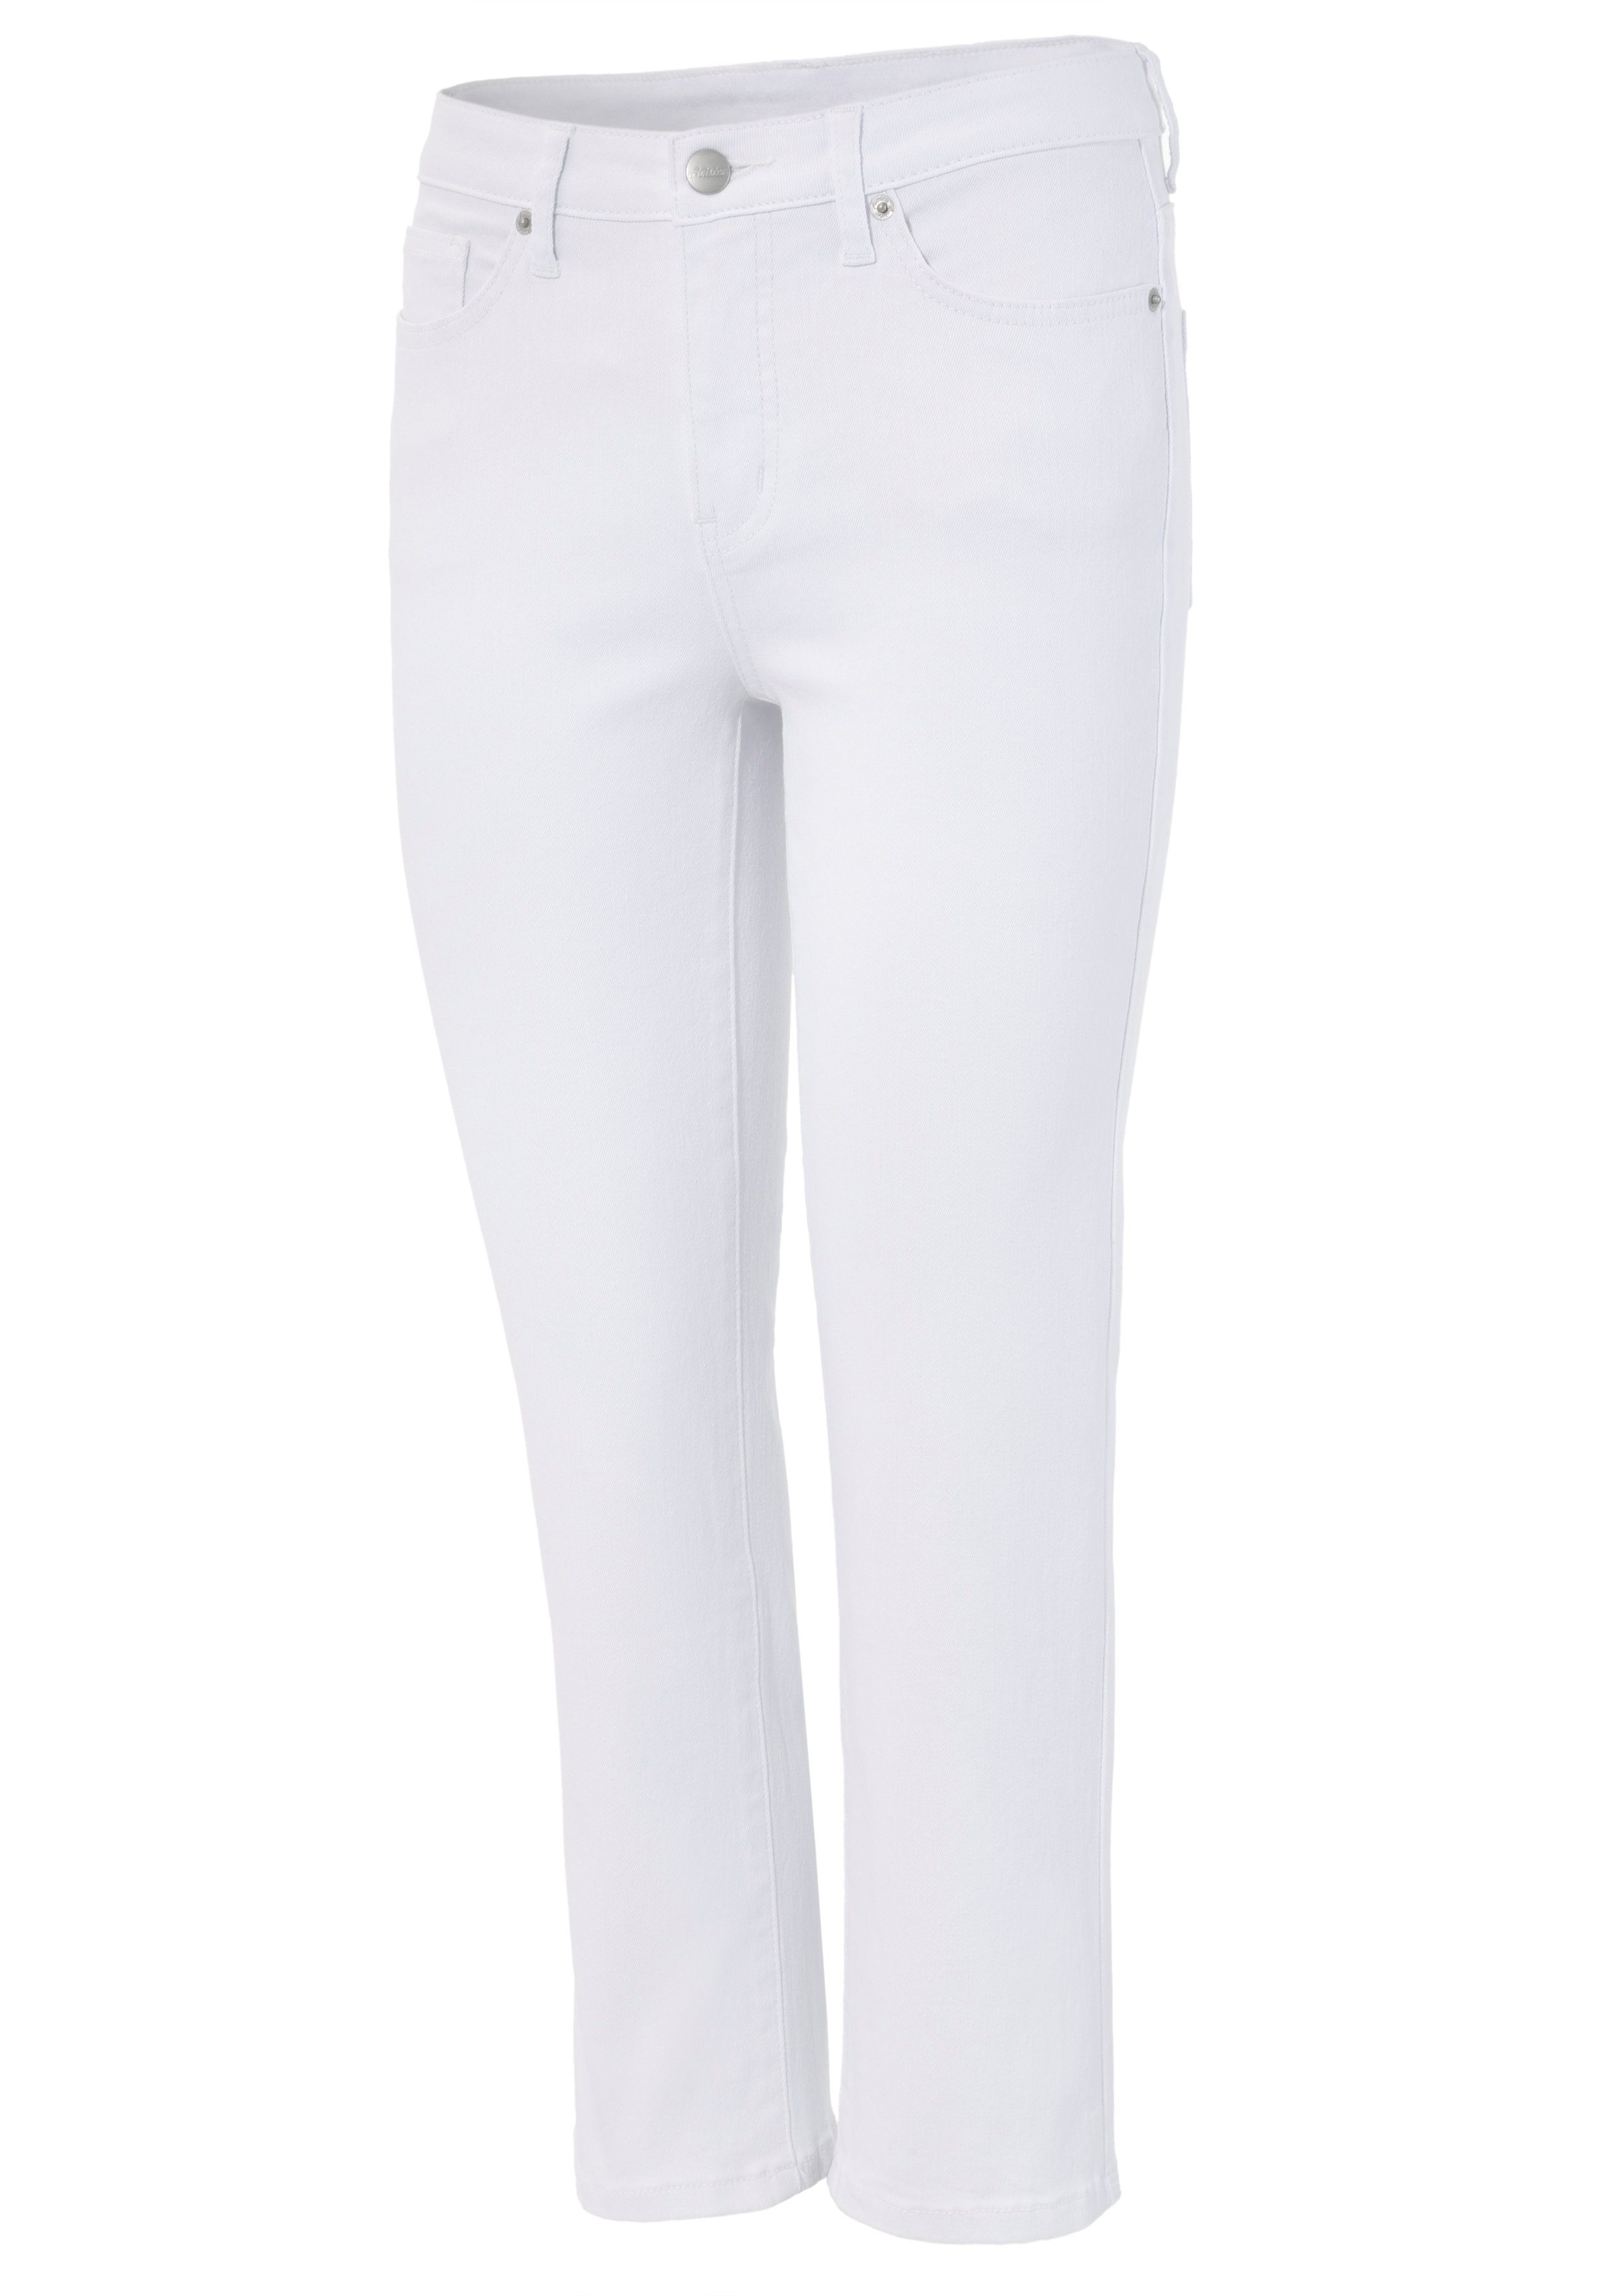 Aniston SELECTED Straight-Jeans in verkürzter cropped weiß Länge